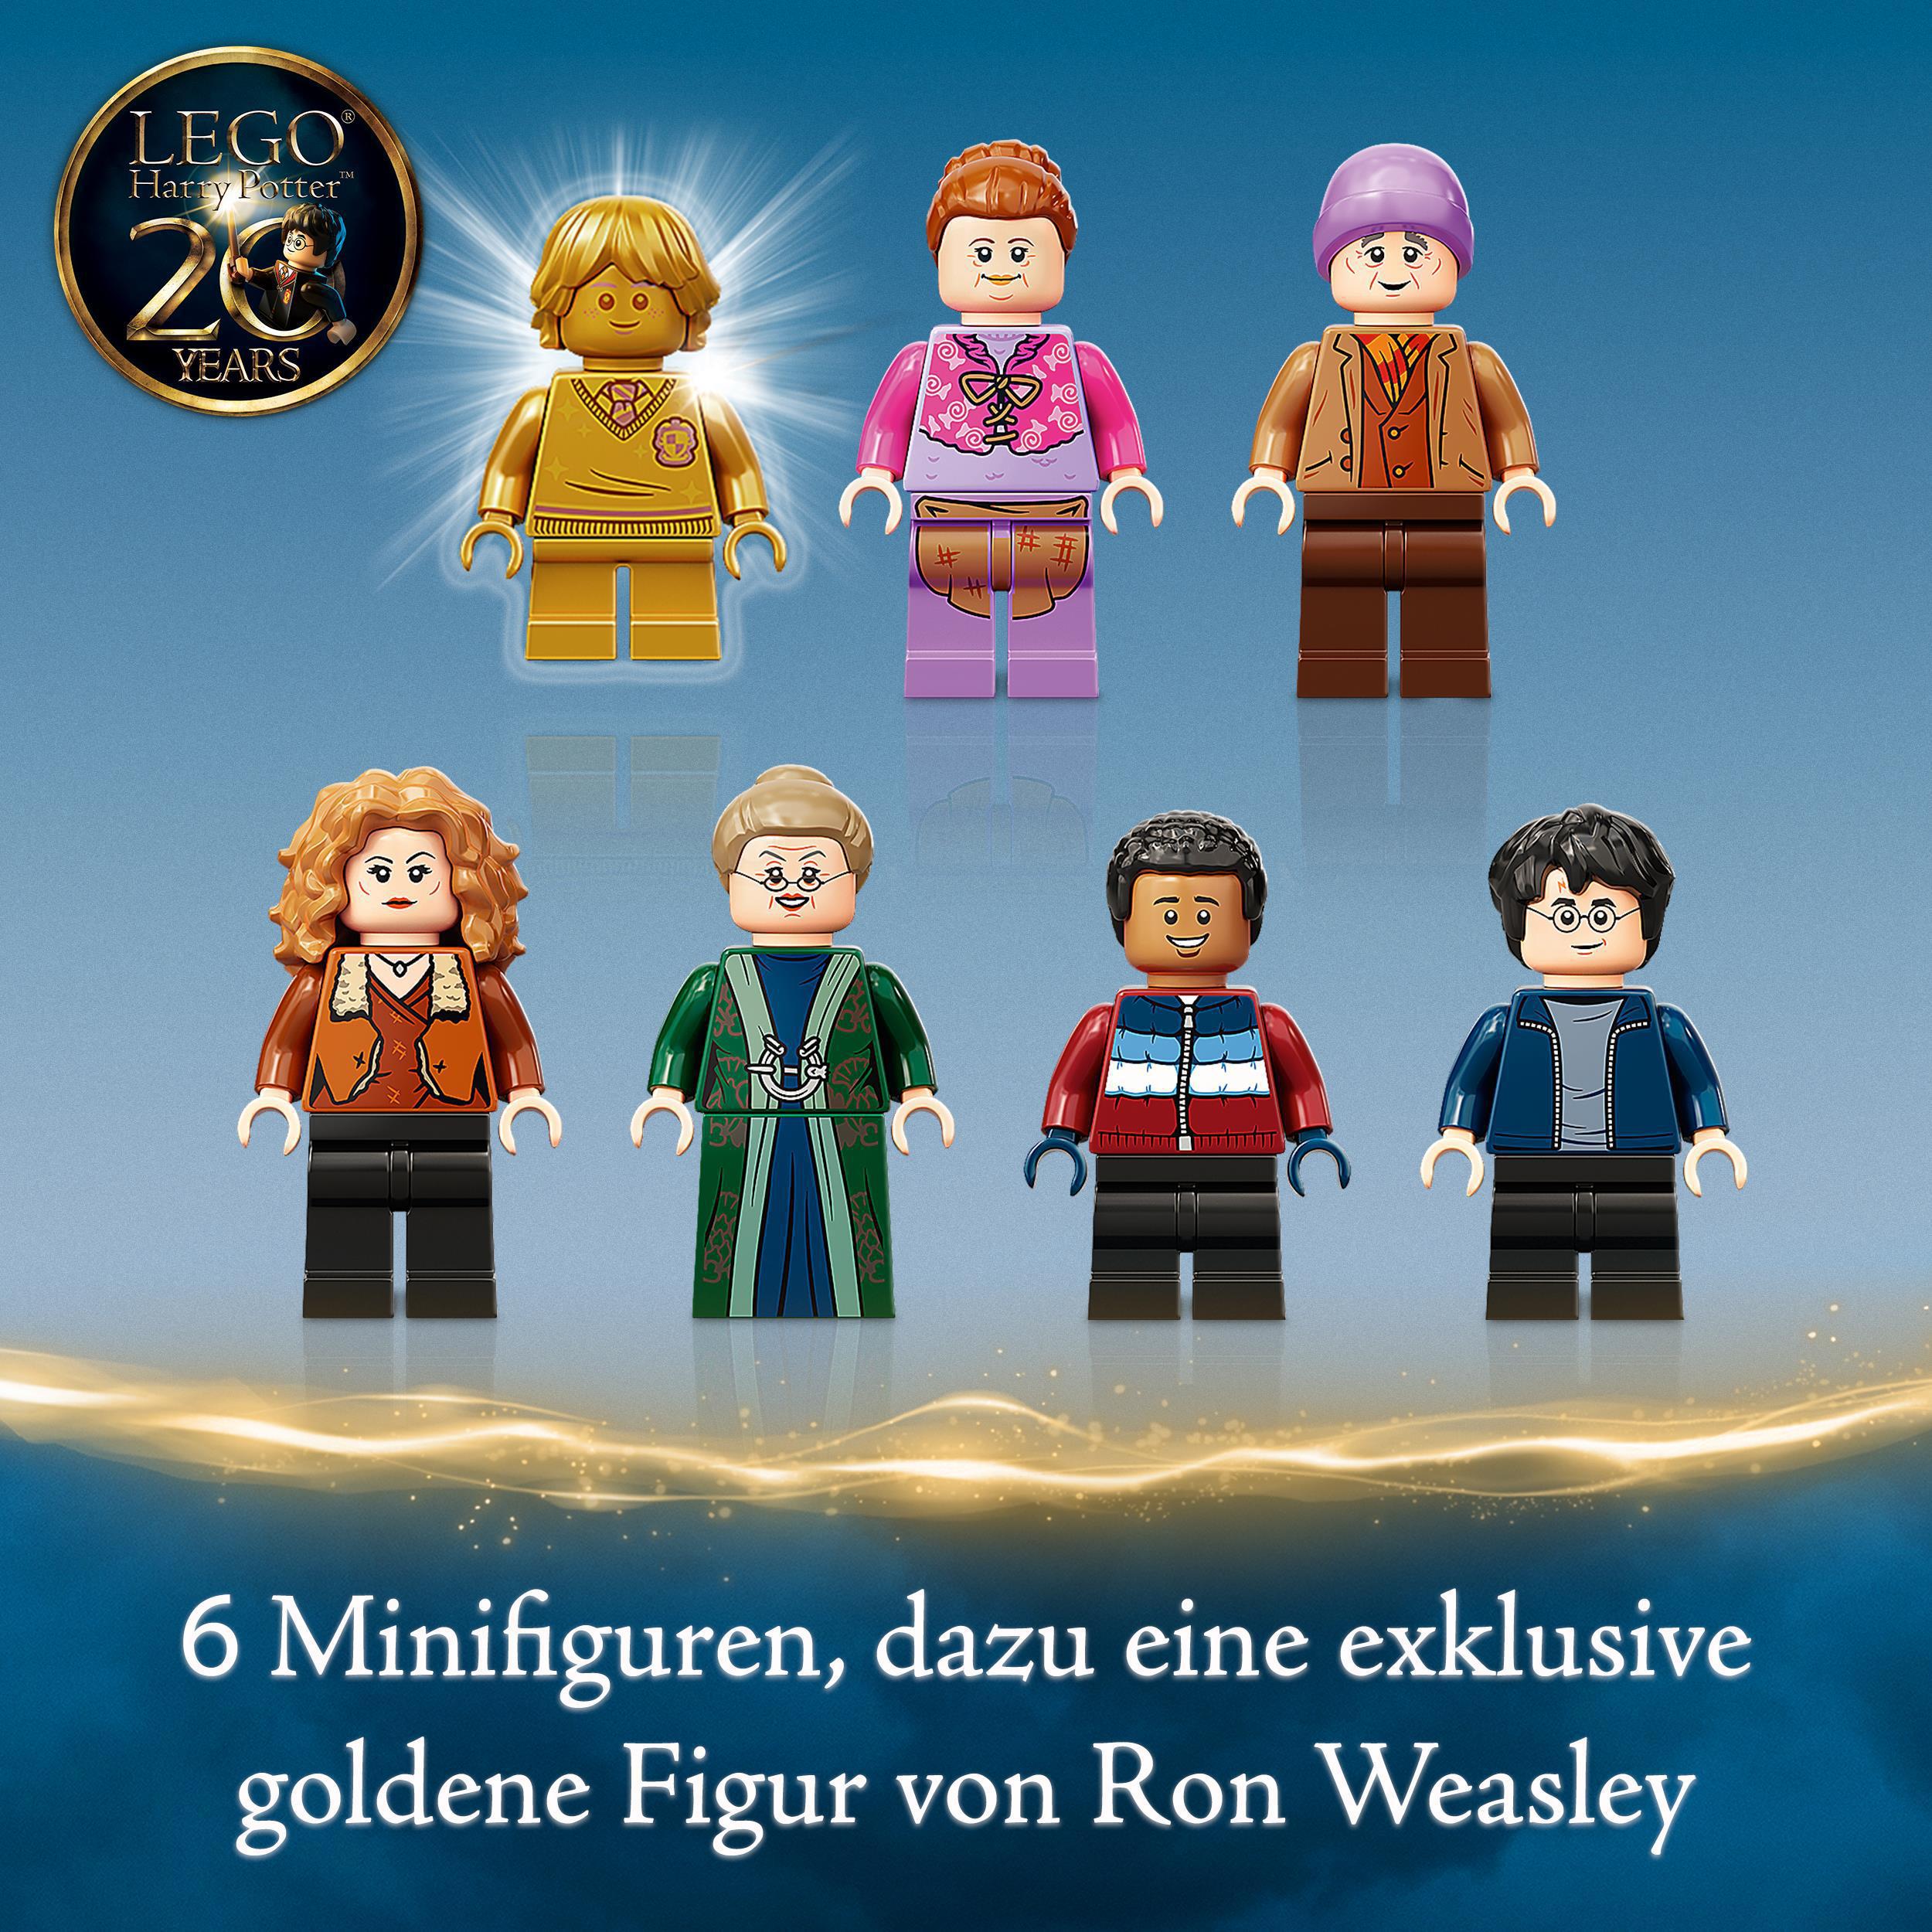 76388 Harry in Besuch LEGO Hogsmeade™ Bausatz, Mehrfarbig Potter